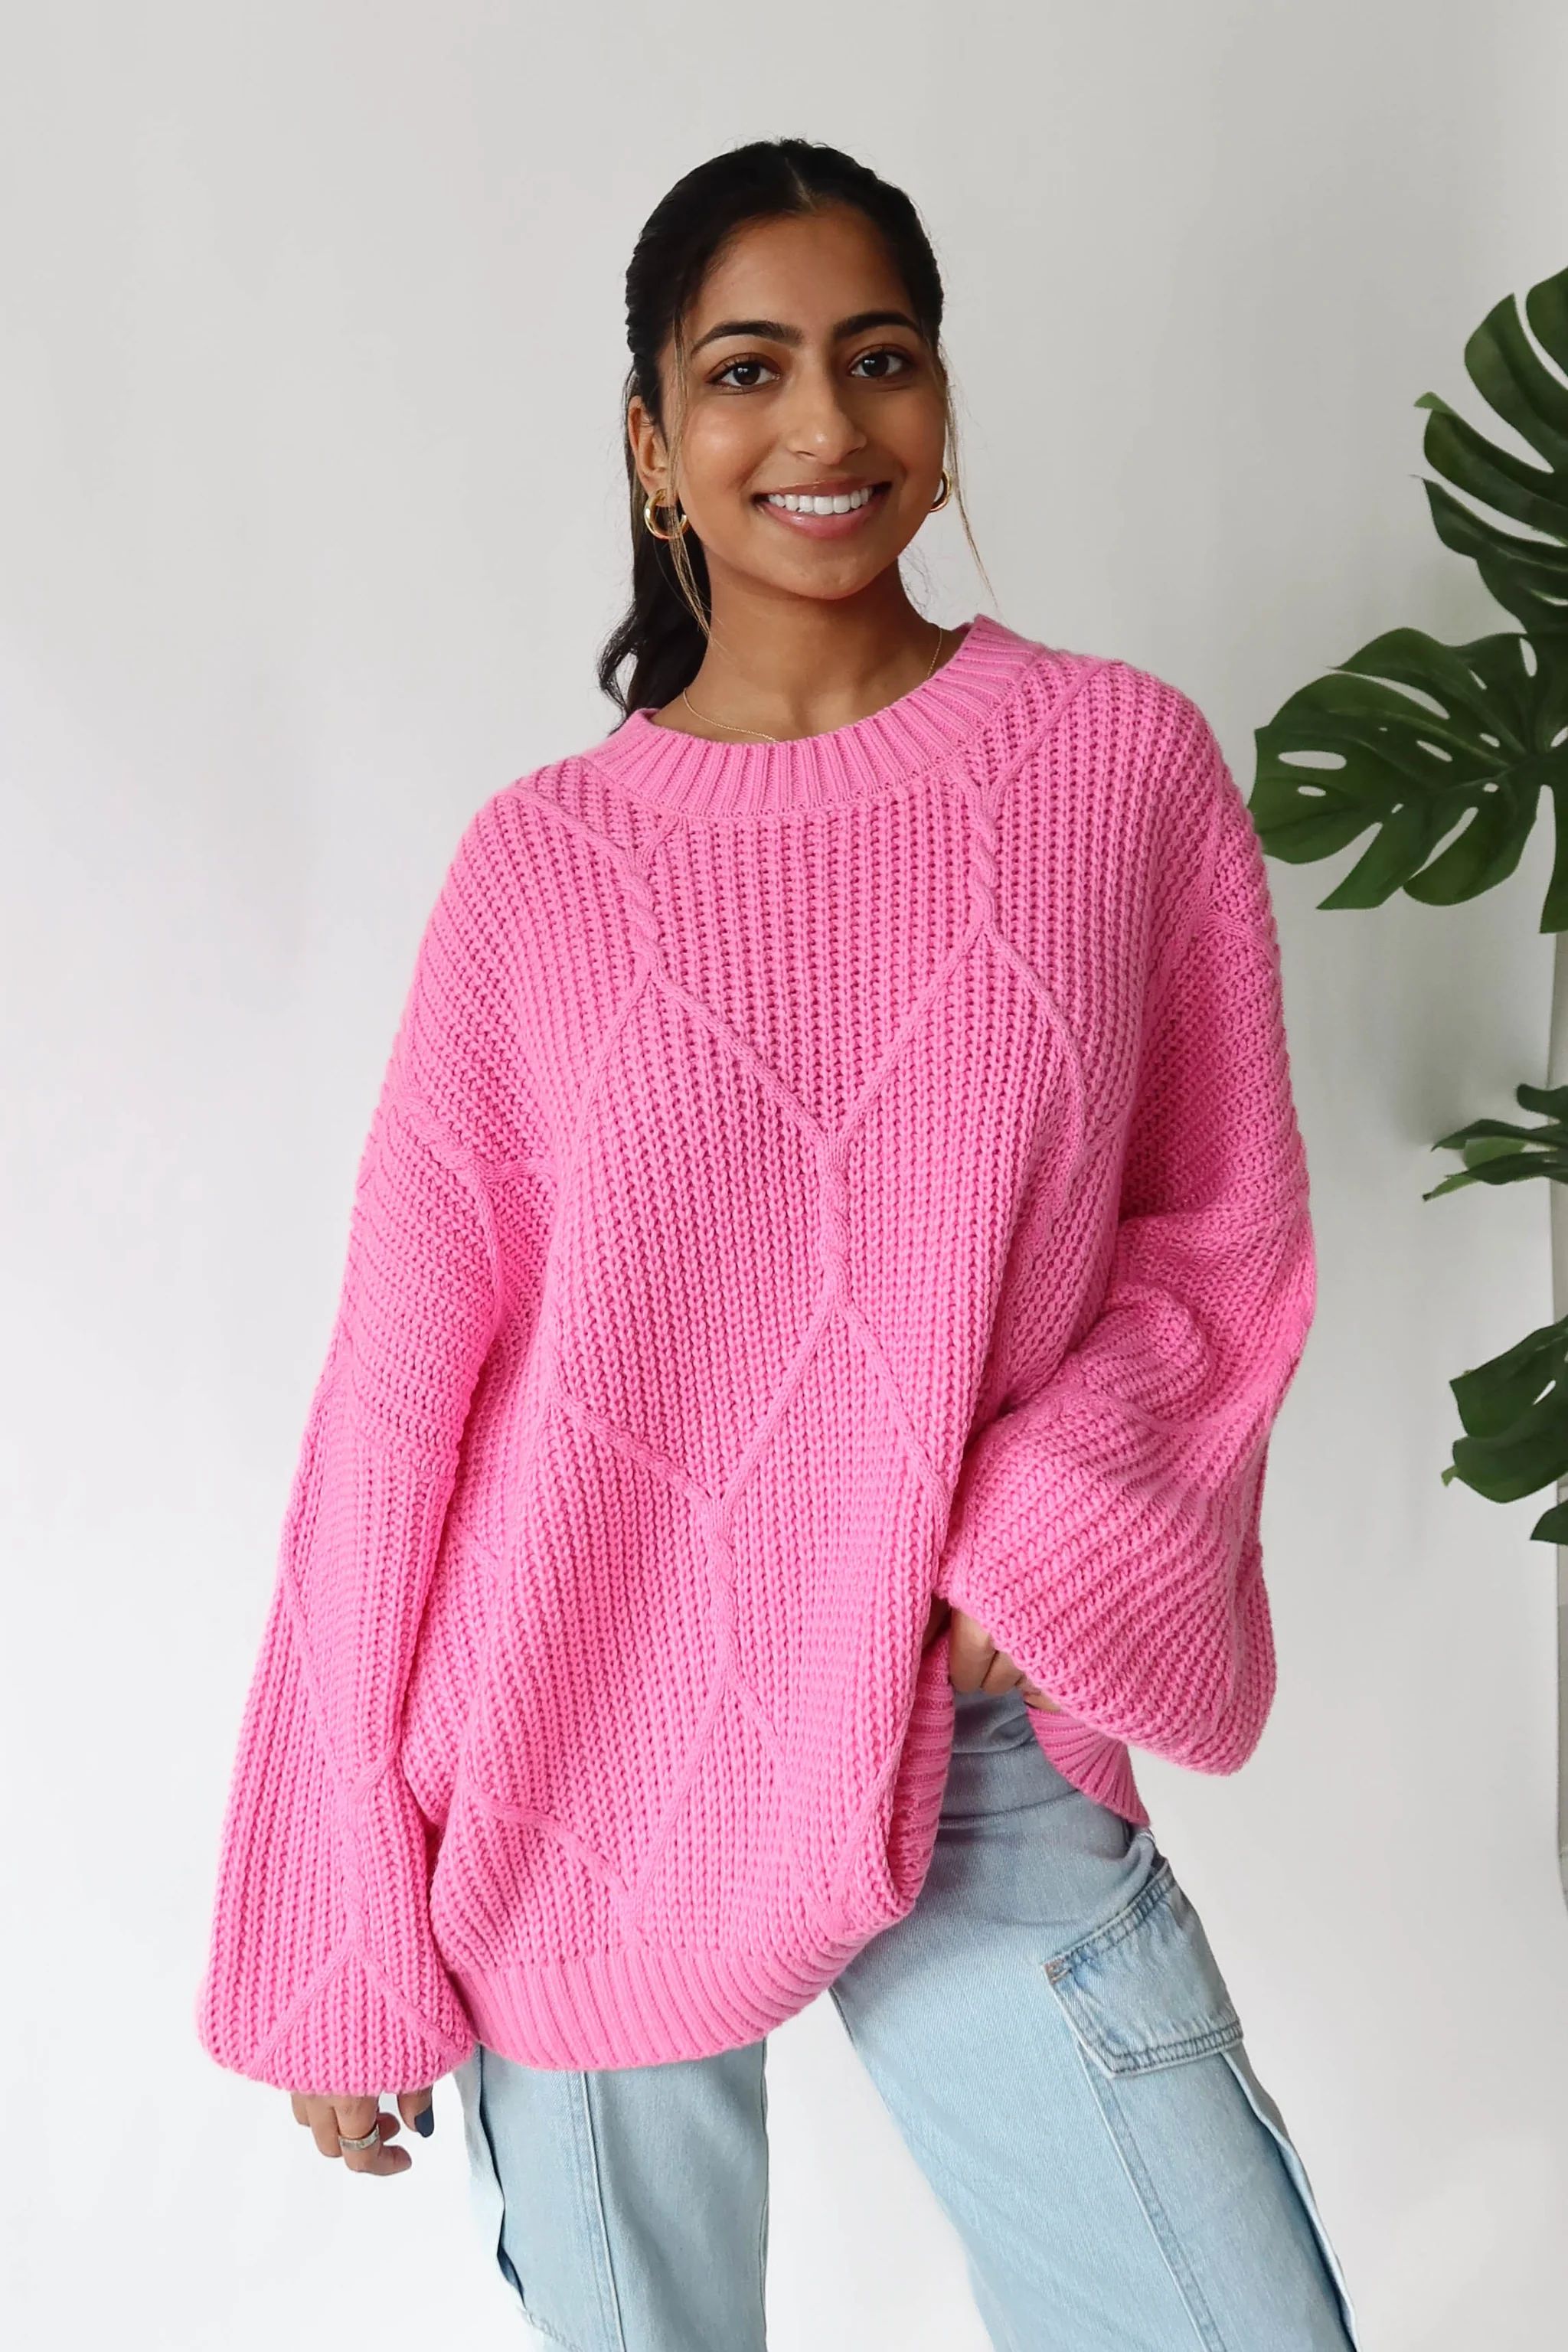 Logan Sweater in Magenta Pink | Grey Bandit